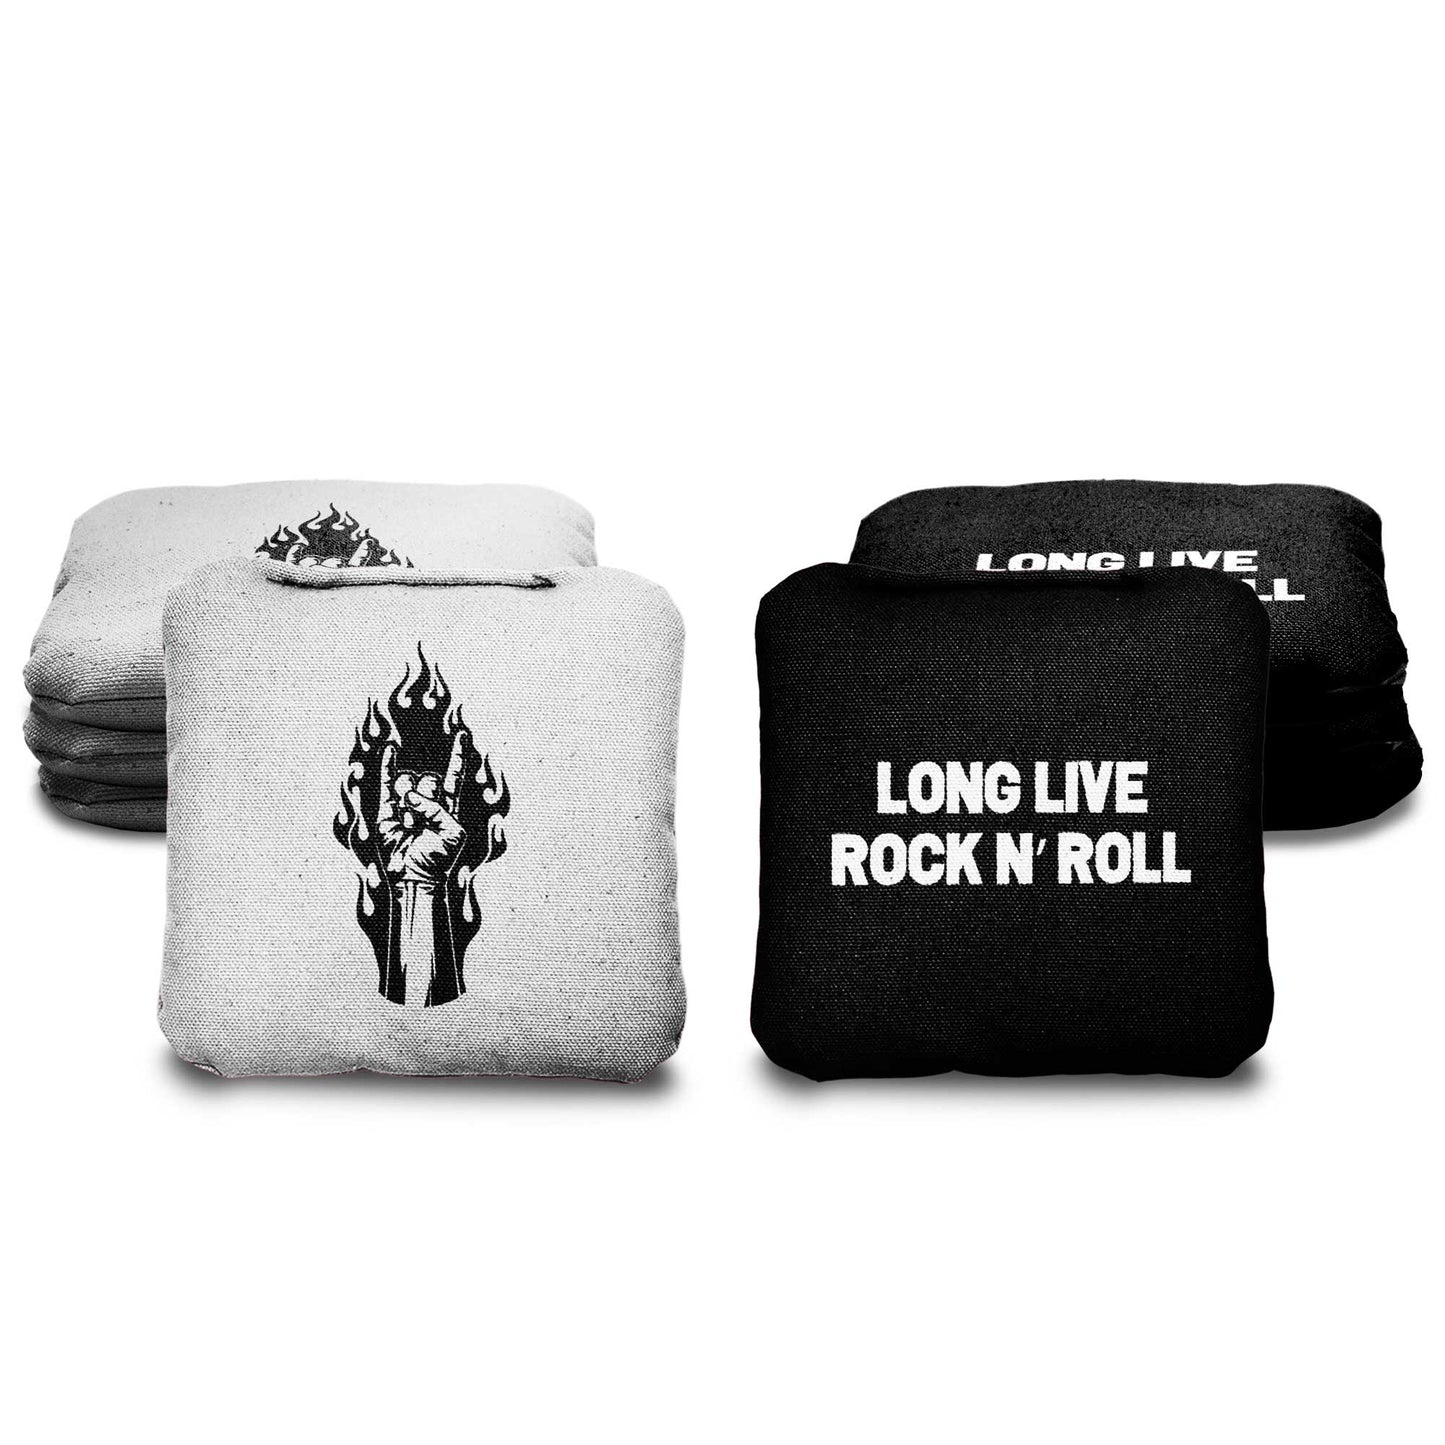 The Long Live Rocks - 8 Cornhole Bags